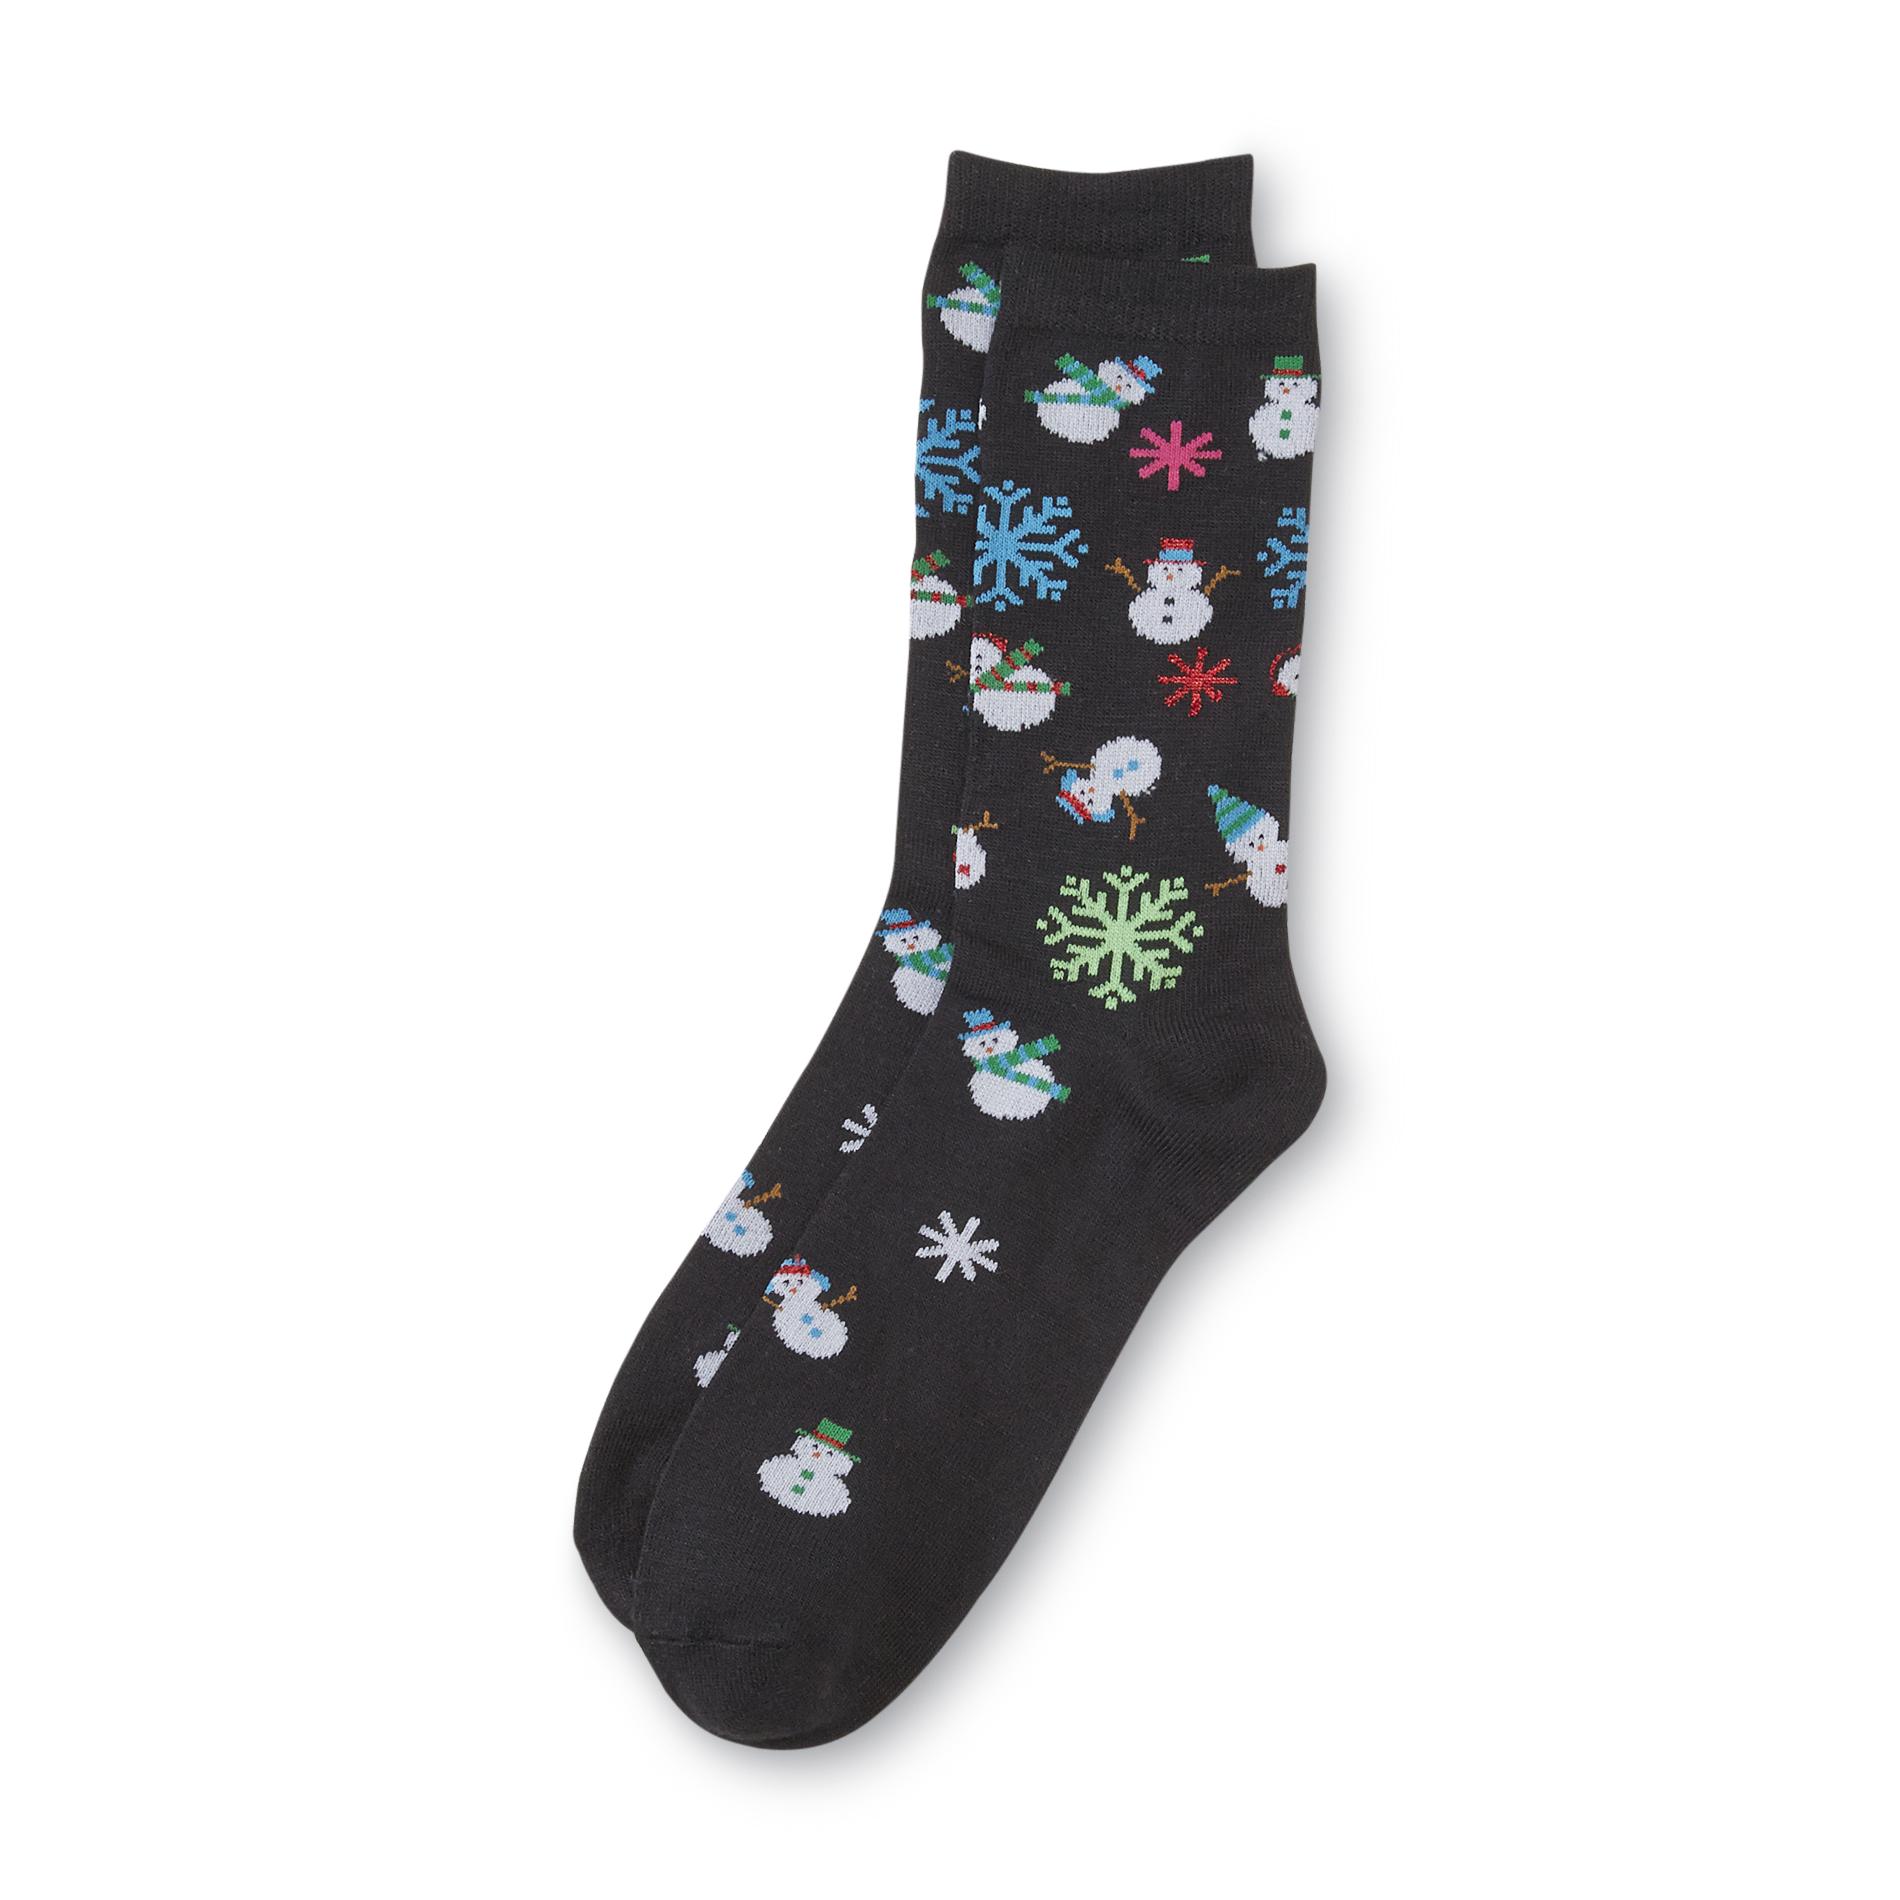 Joe Boxer Women's Novelty Crew Socks -  Neon Snowflakes